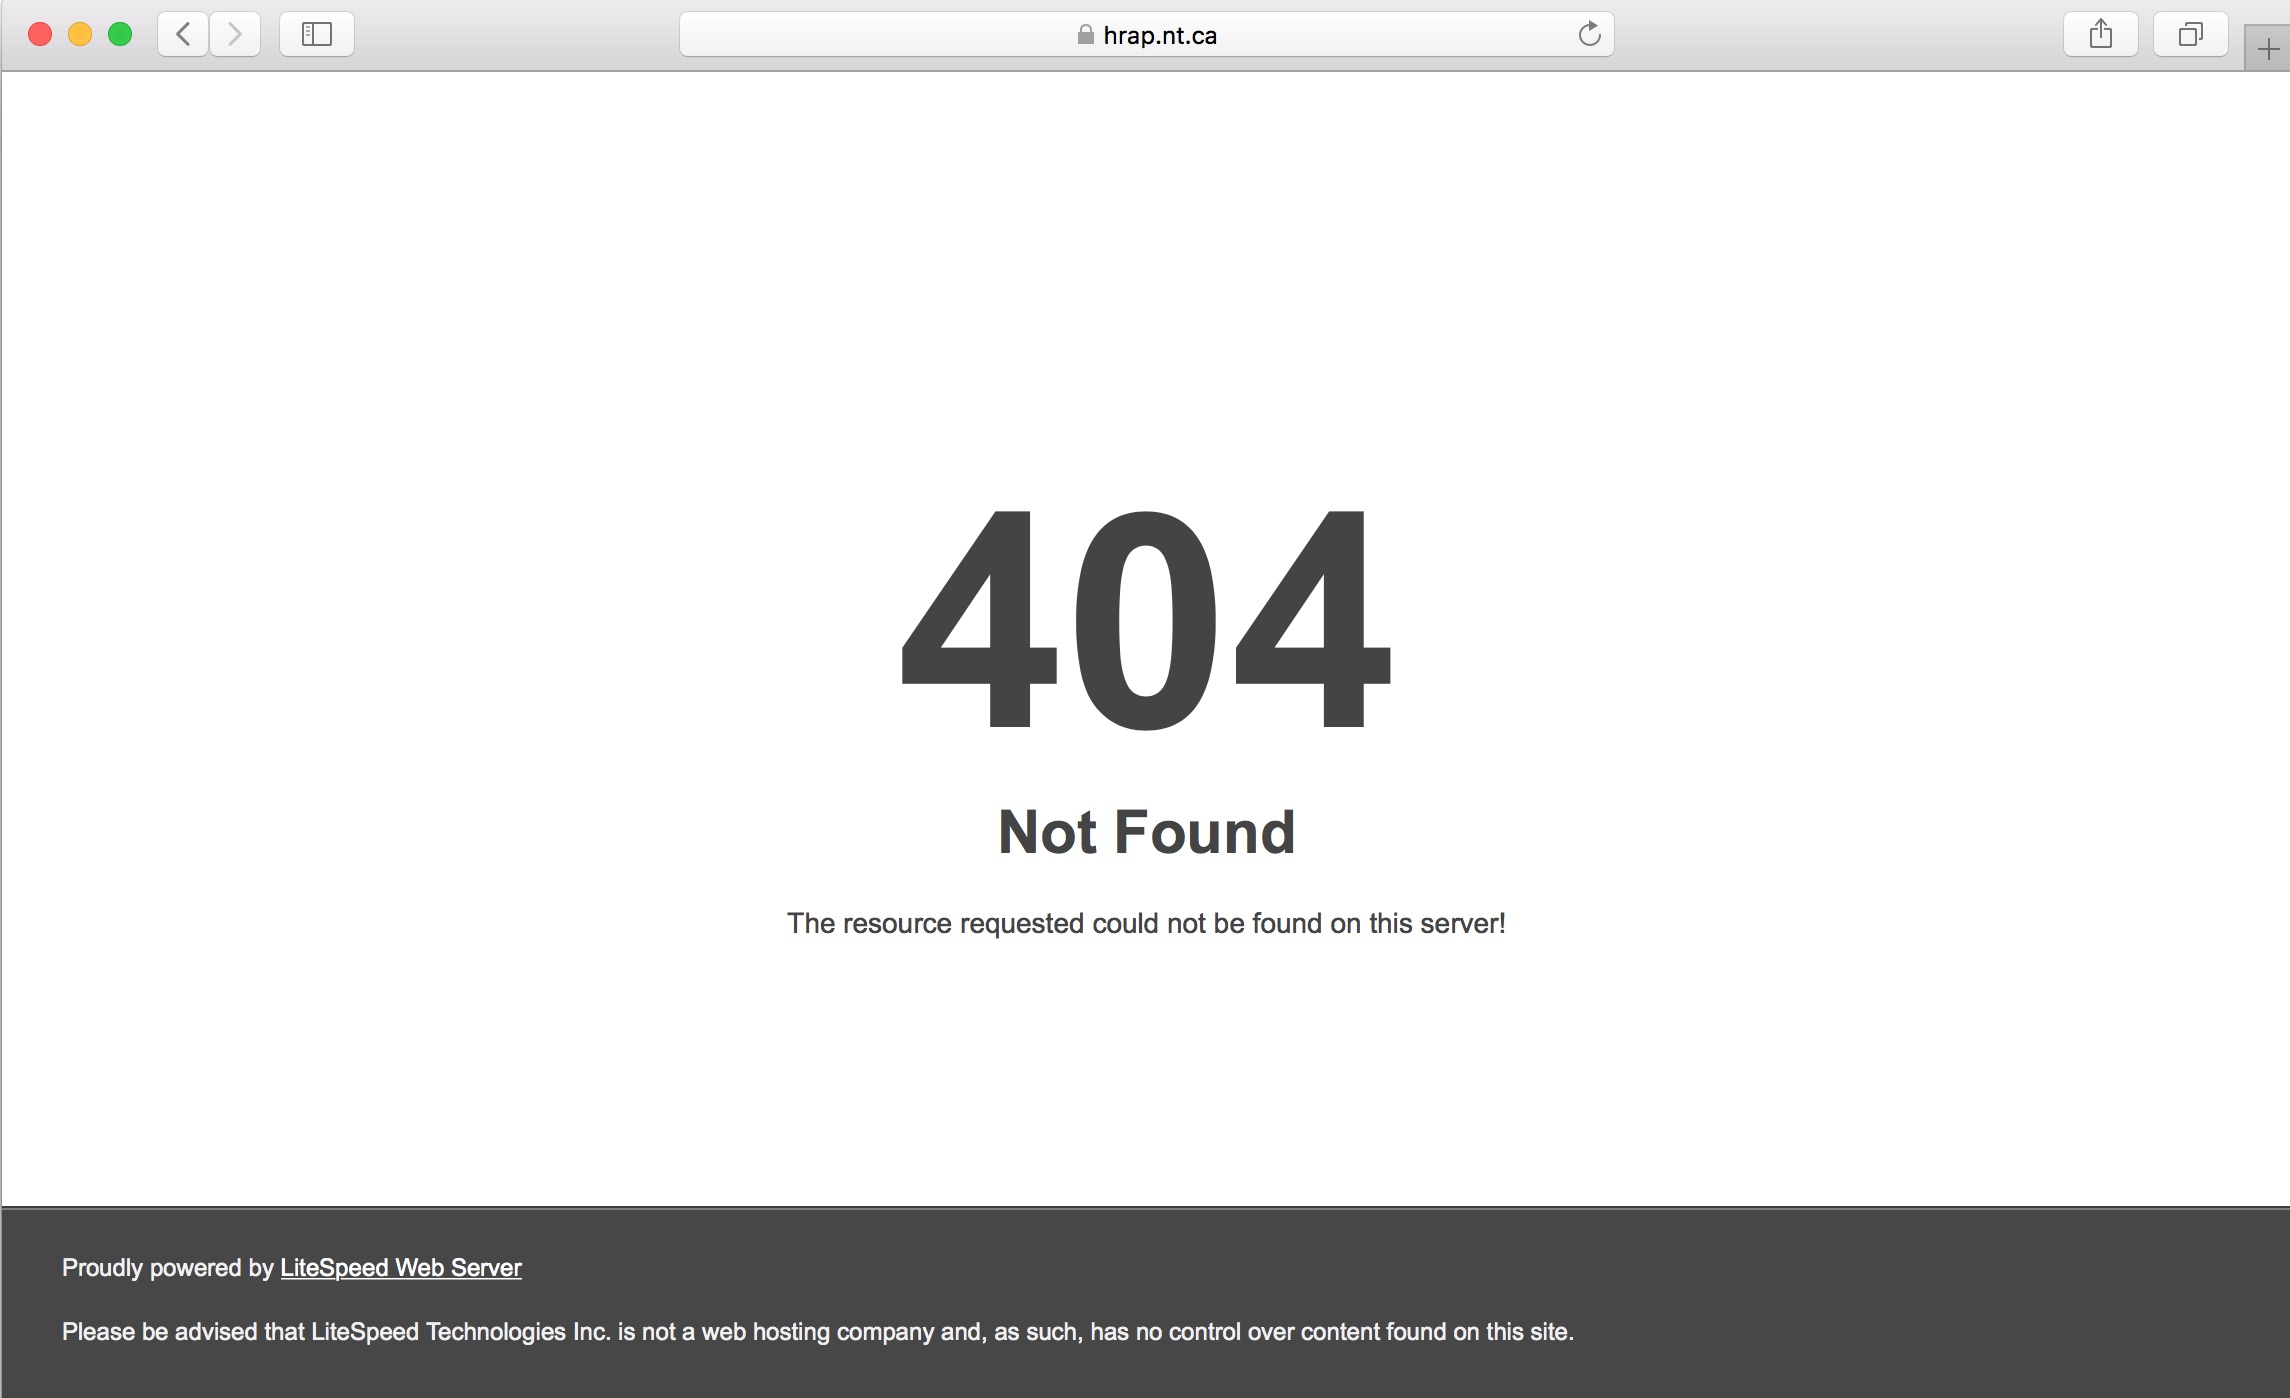 http status 404 not found